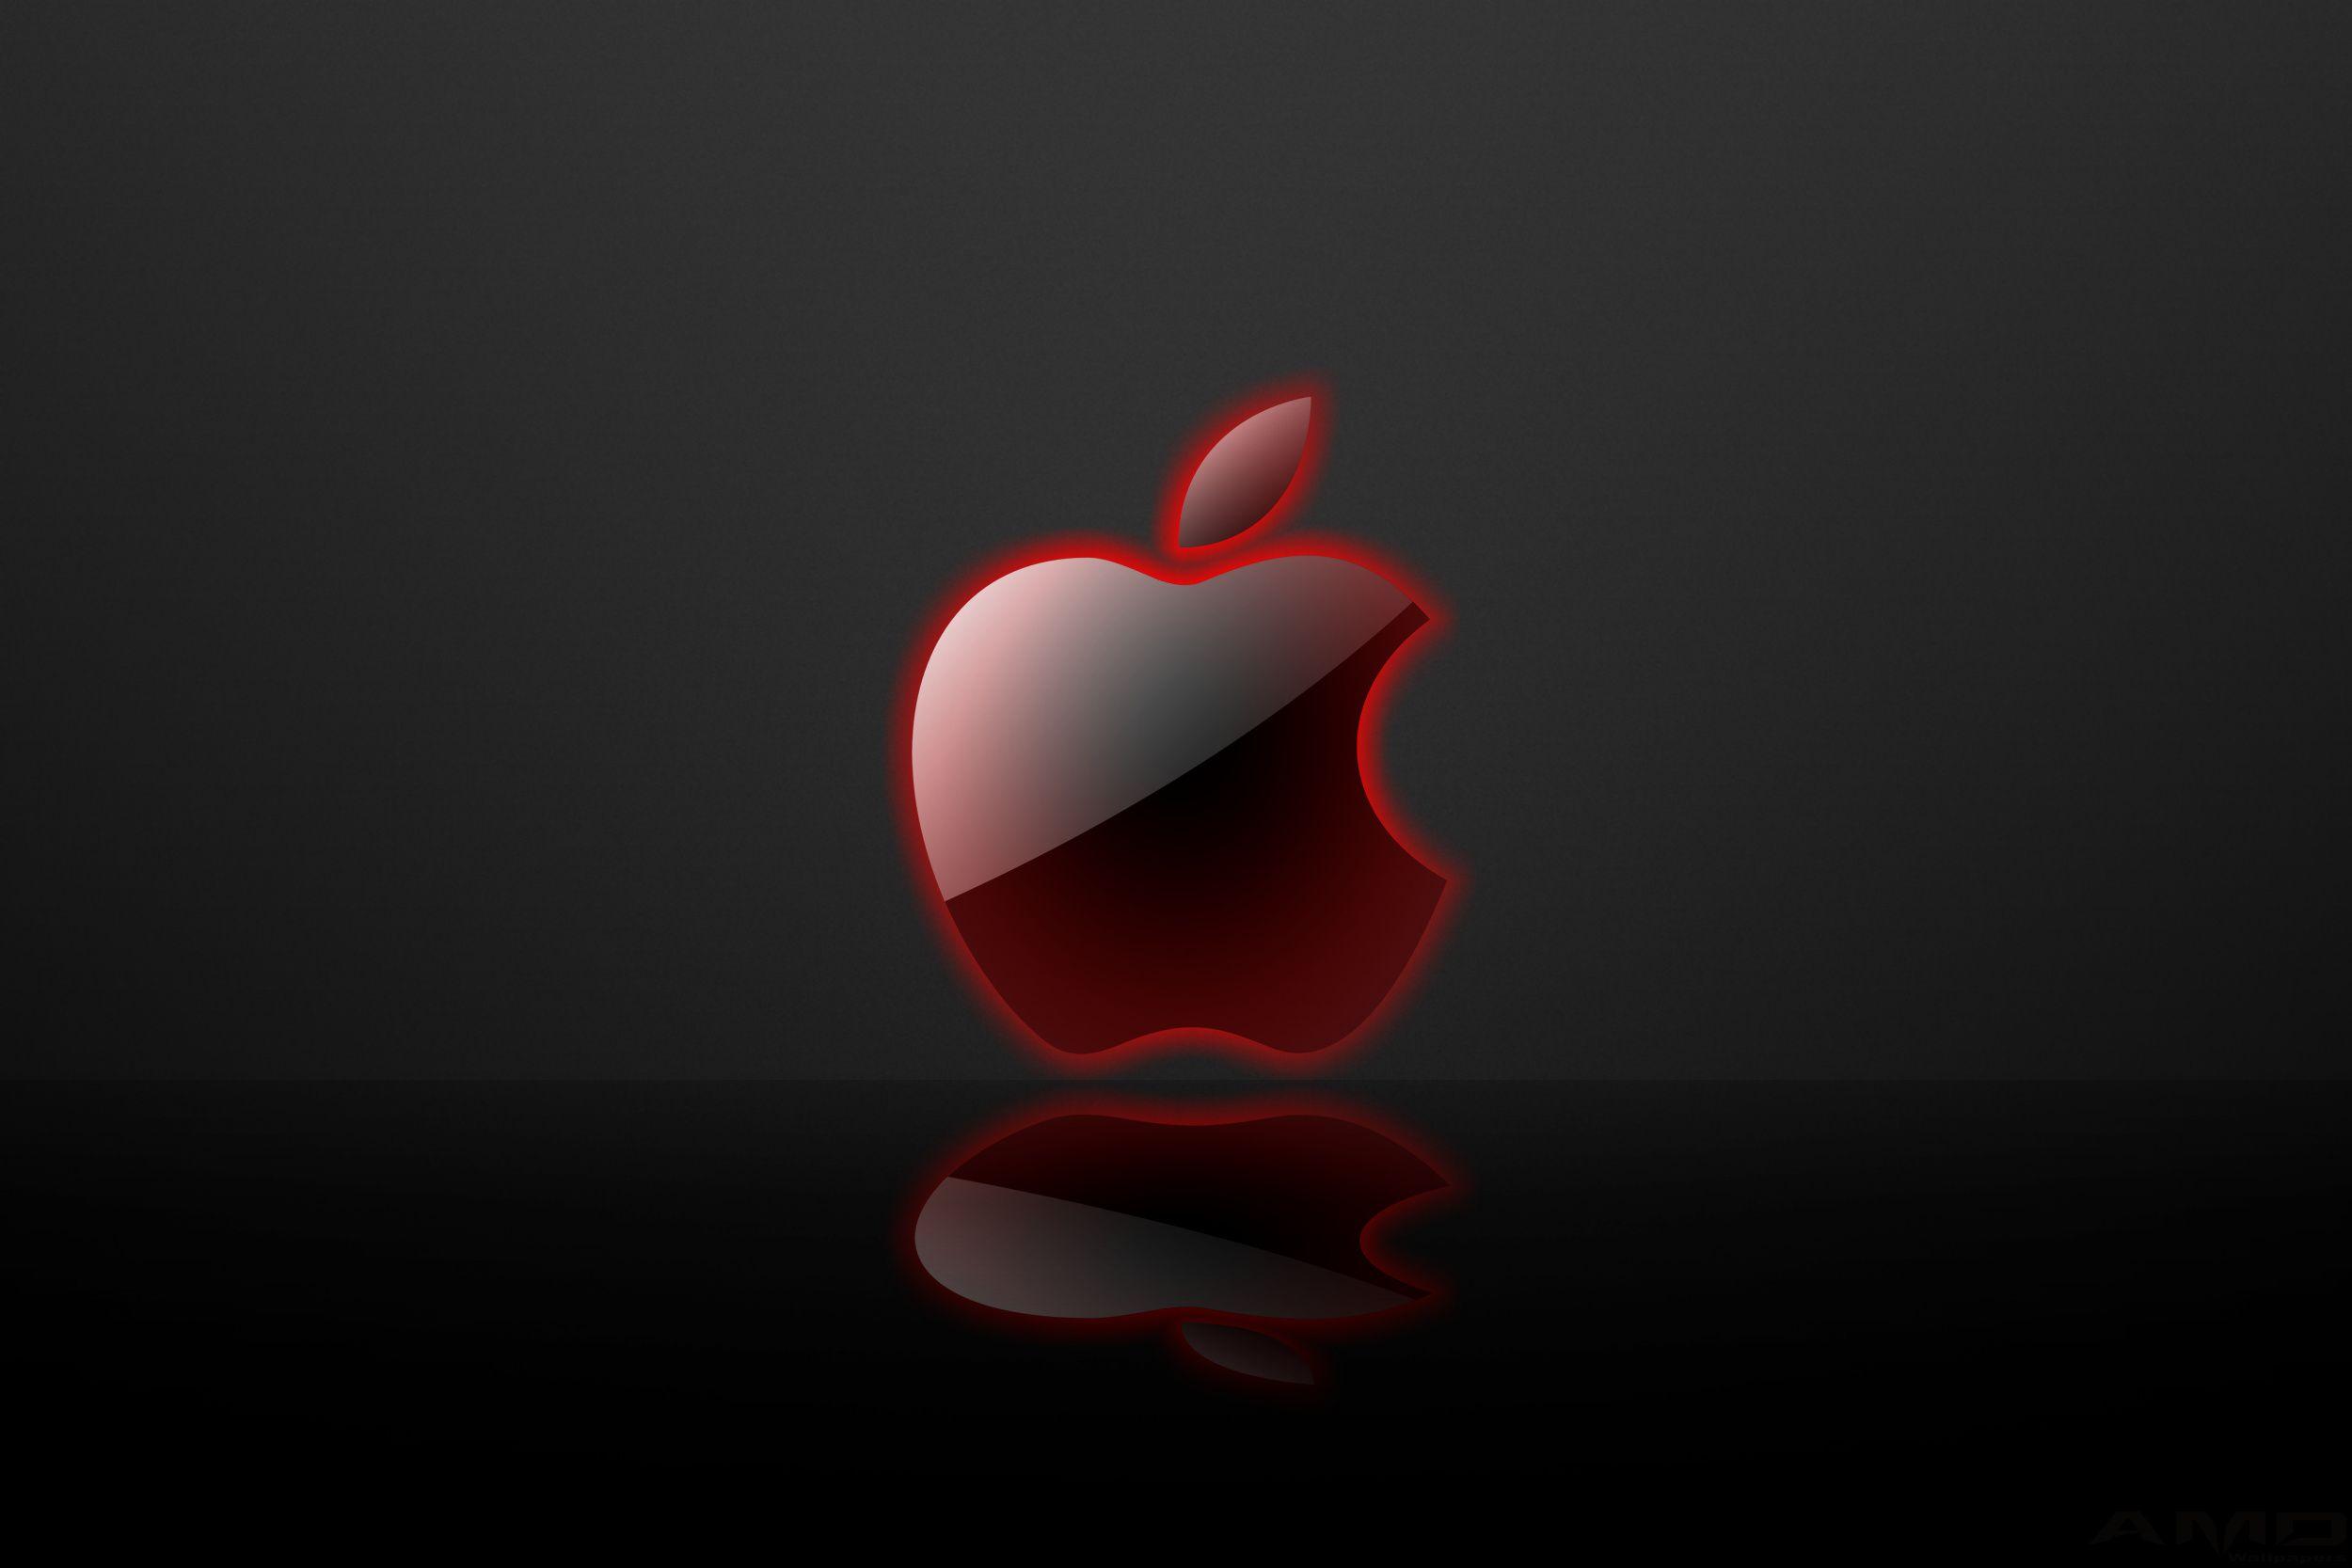 Black and Red Apple Logo - Red Apple Logo Wallpaper